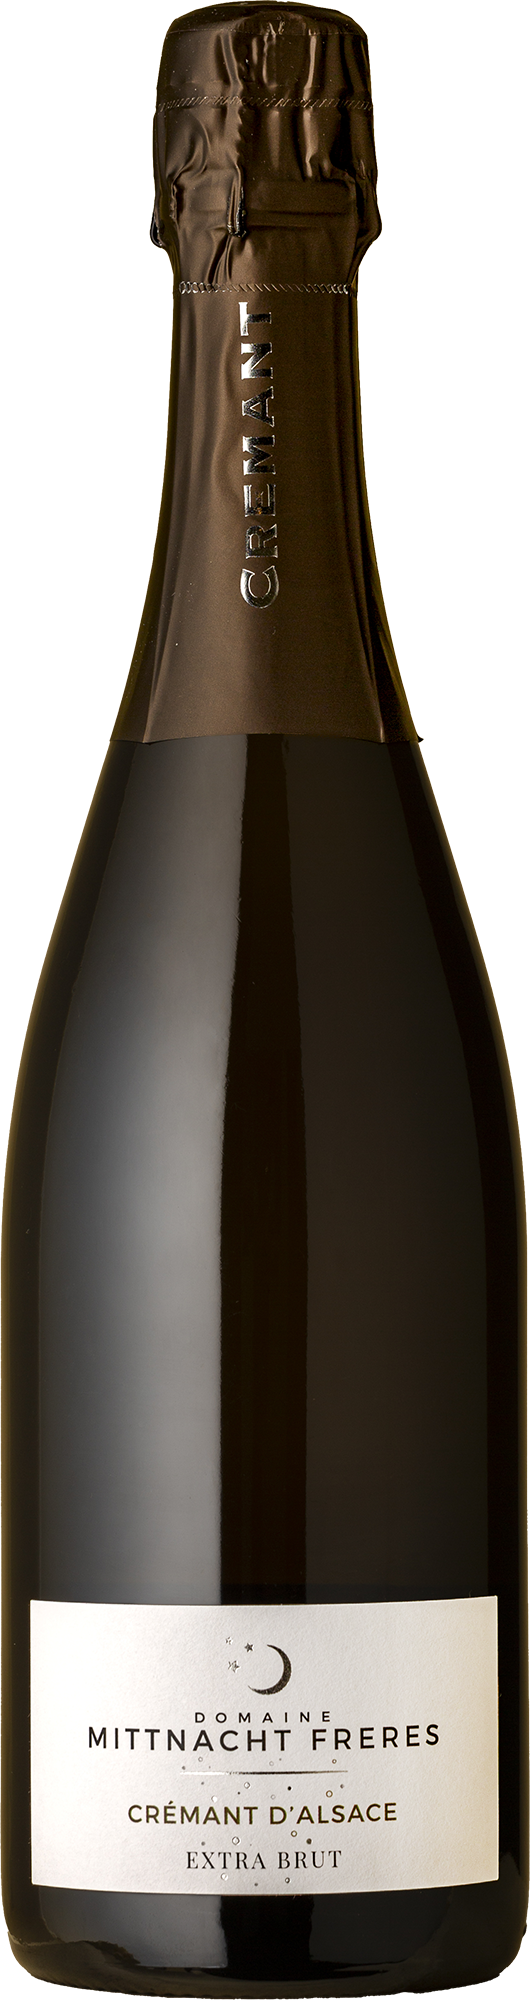 Domaine Mittnacht Freres - Cremant d'Alsace Extra Brut NV Sparkling Wine